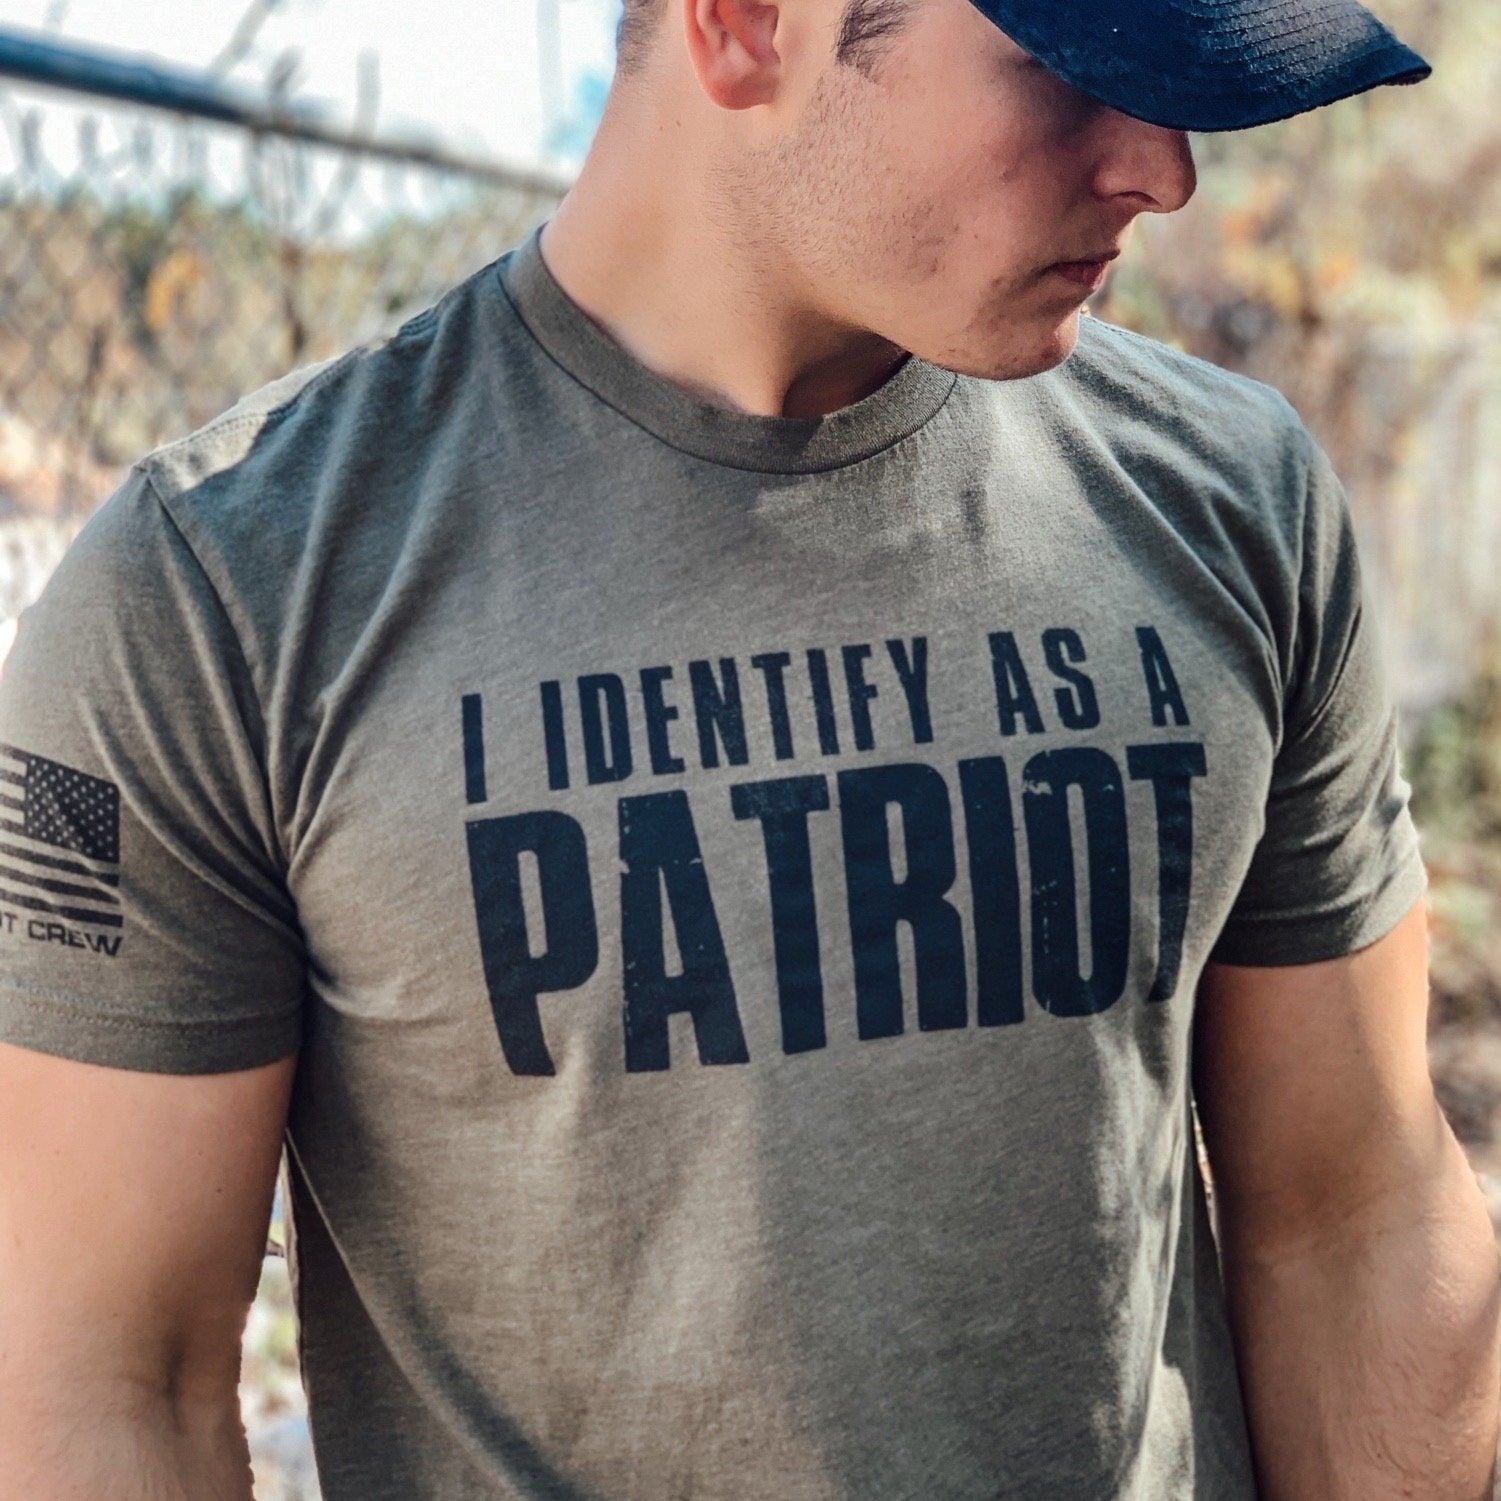 I Identify As A Patriot T-Shirt